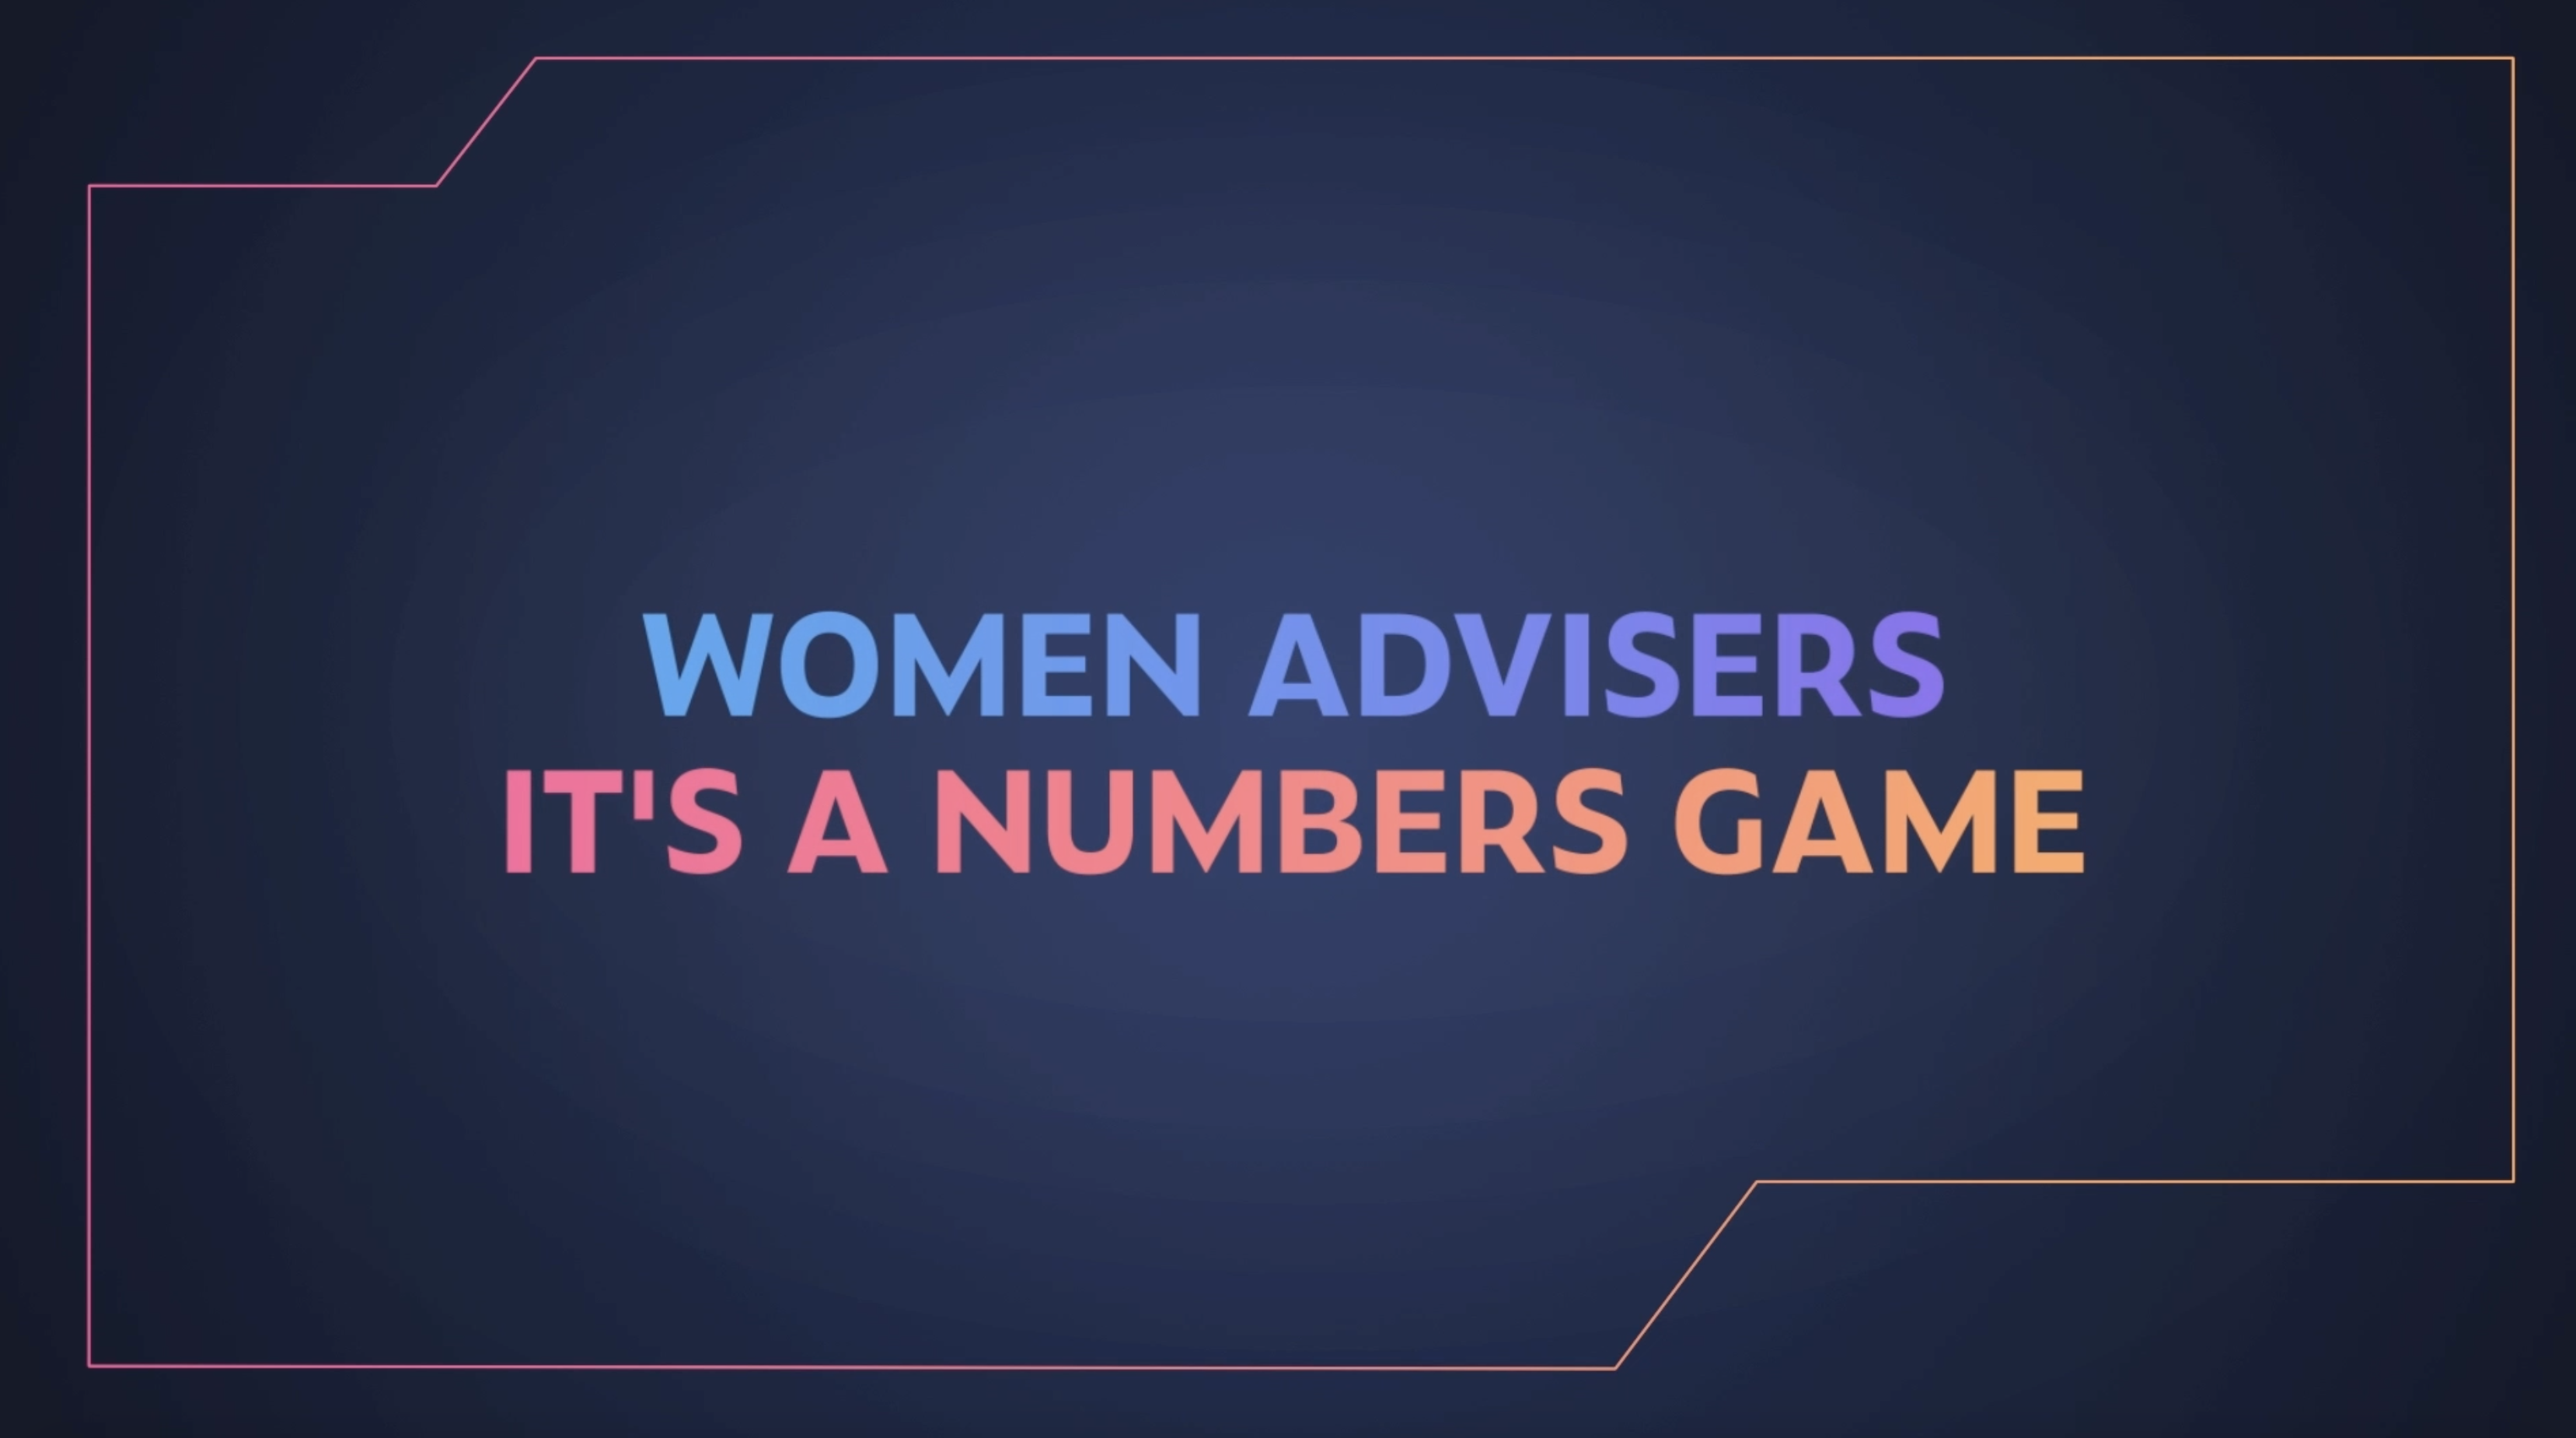 Women in the advice industry